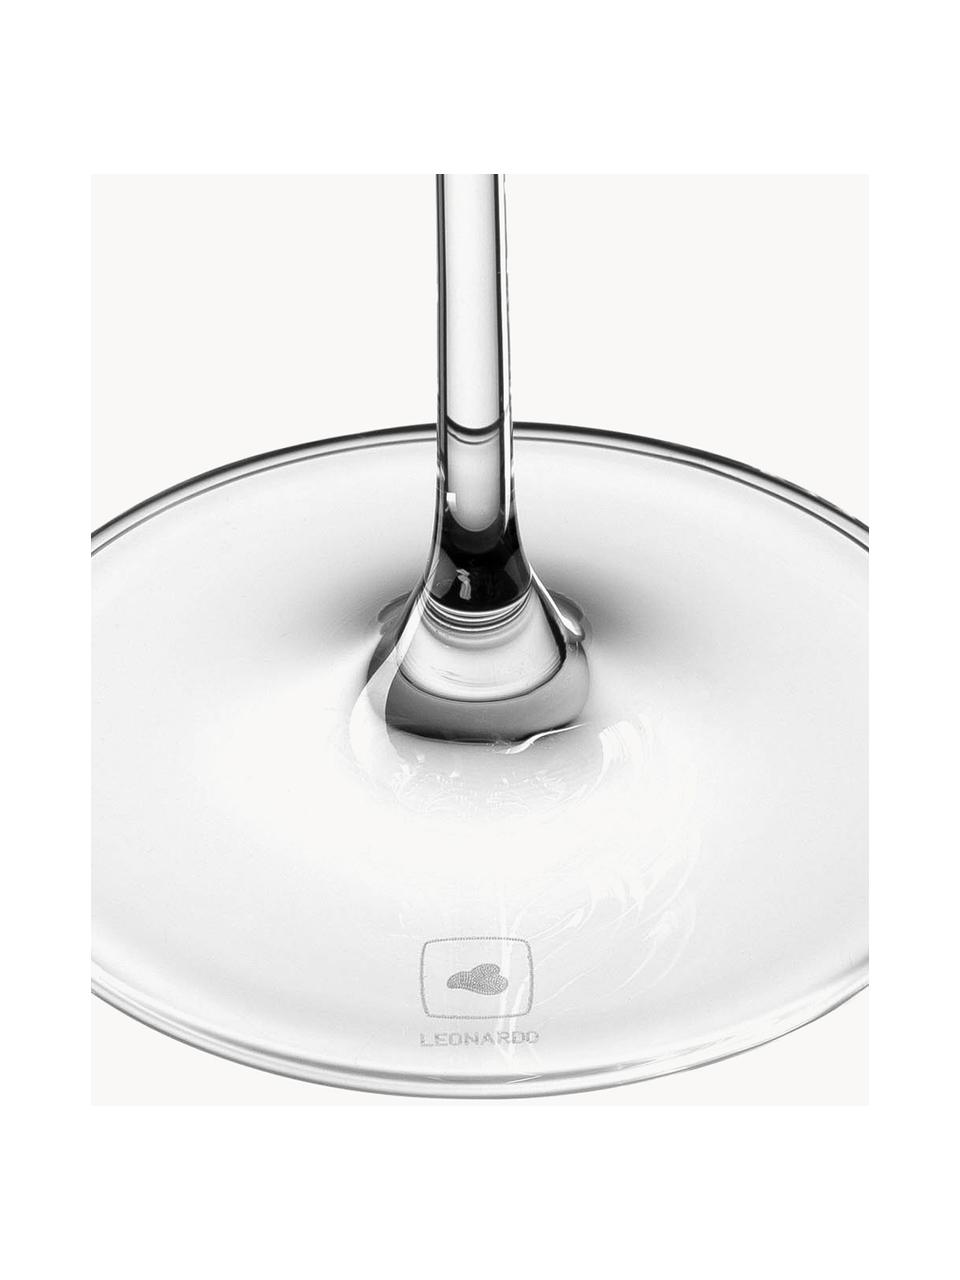 Champagneglas Puccini, 6 stuks, Teqton® glas, Transparant, Ø 7 x H 26 cm, 280 ml